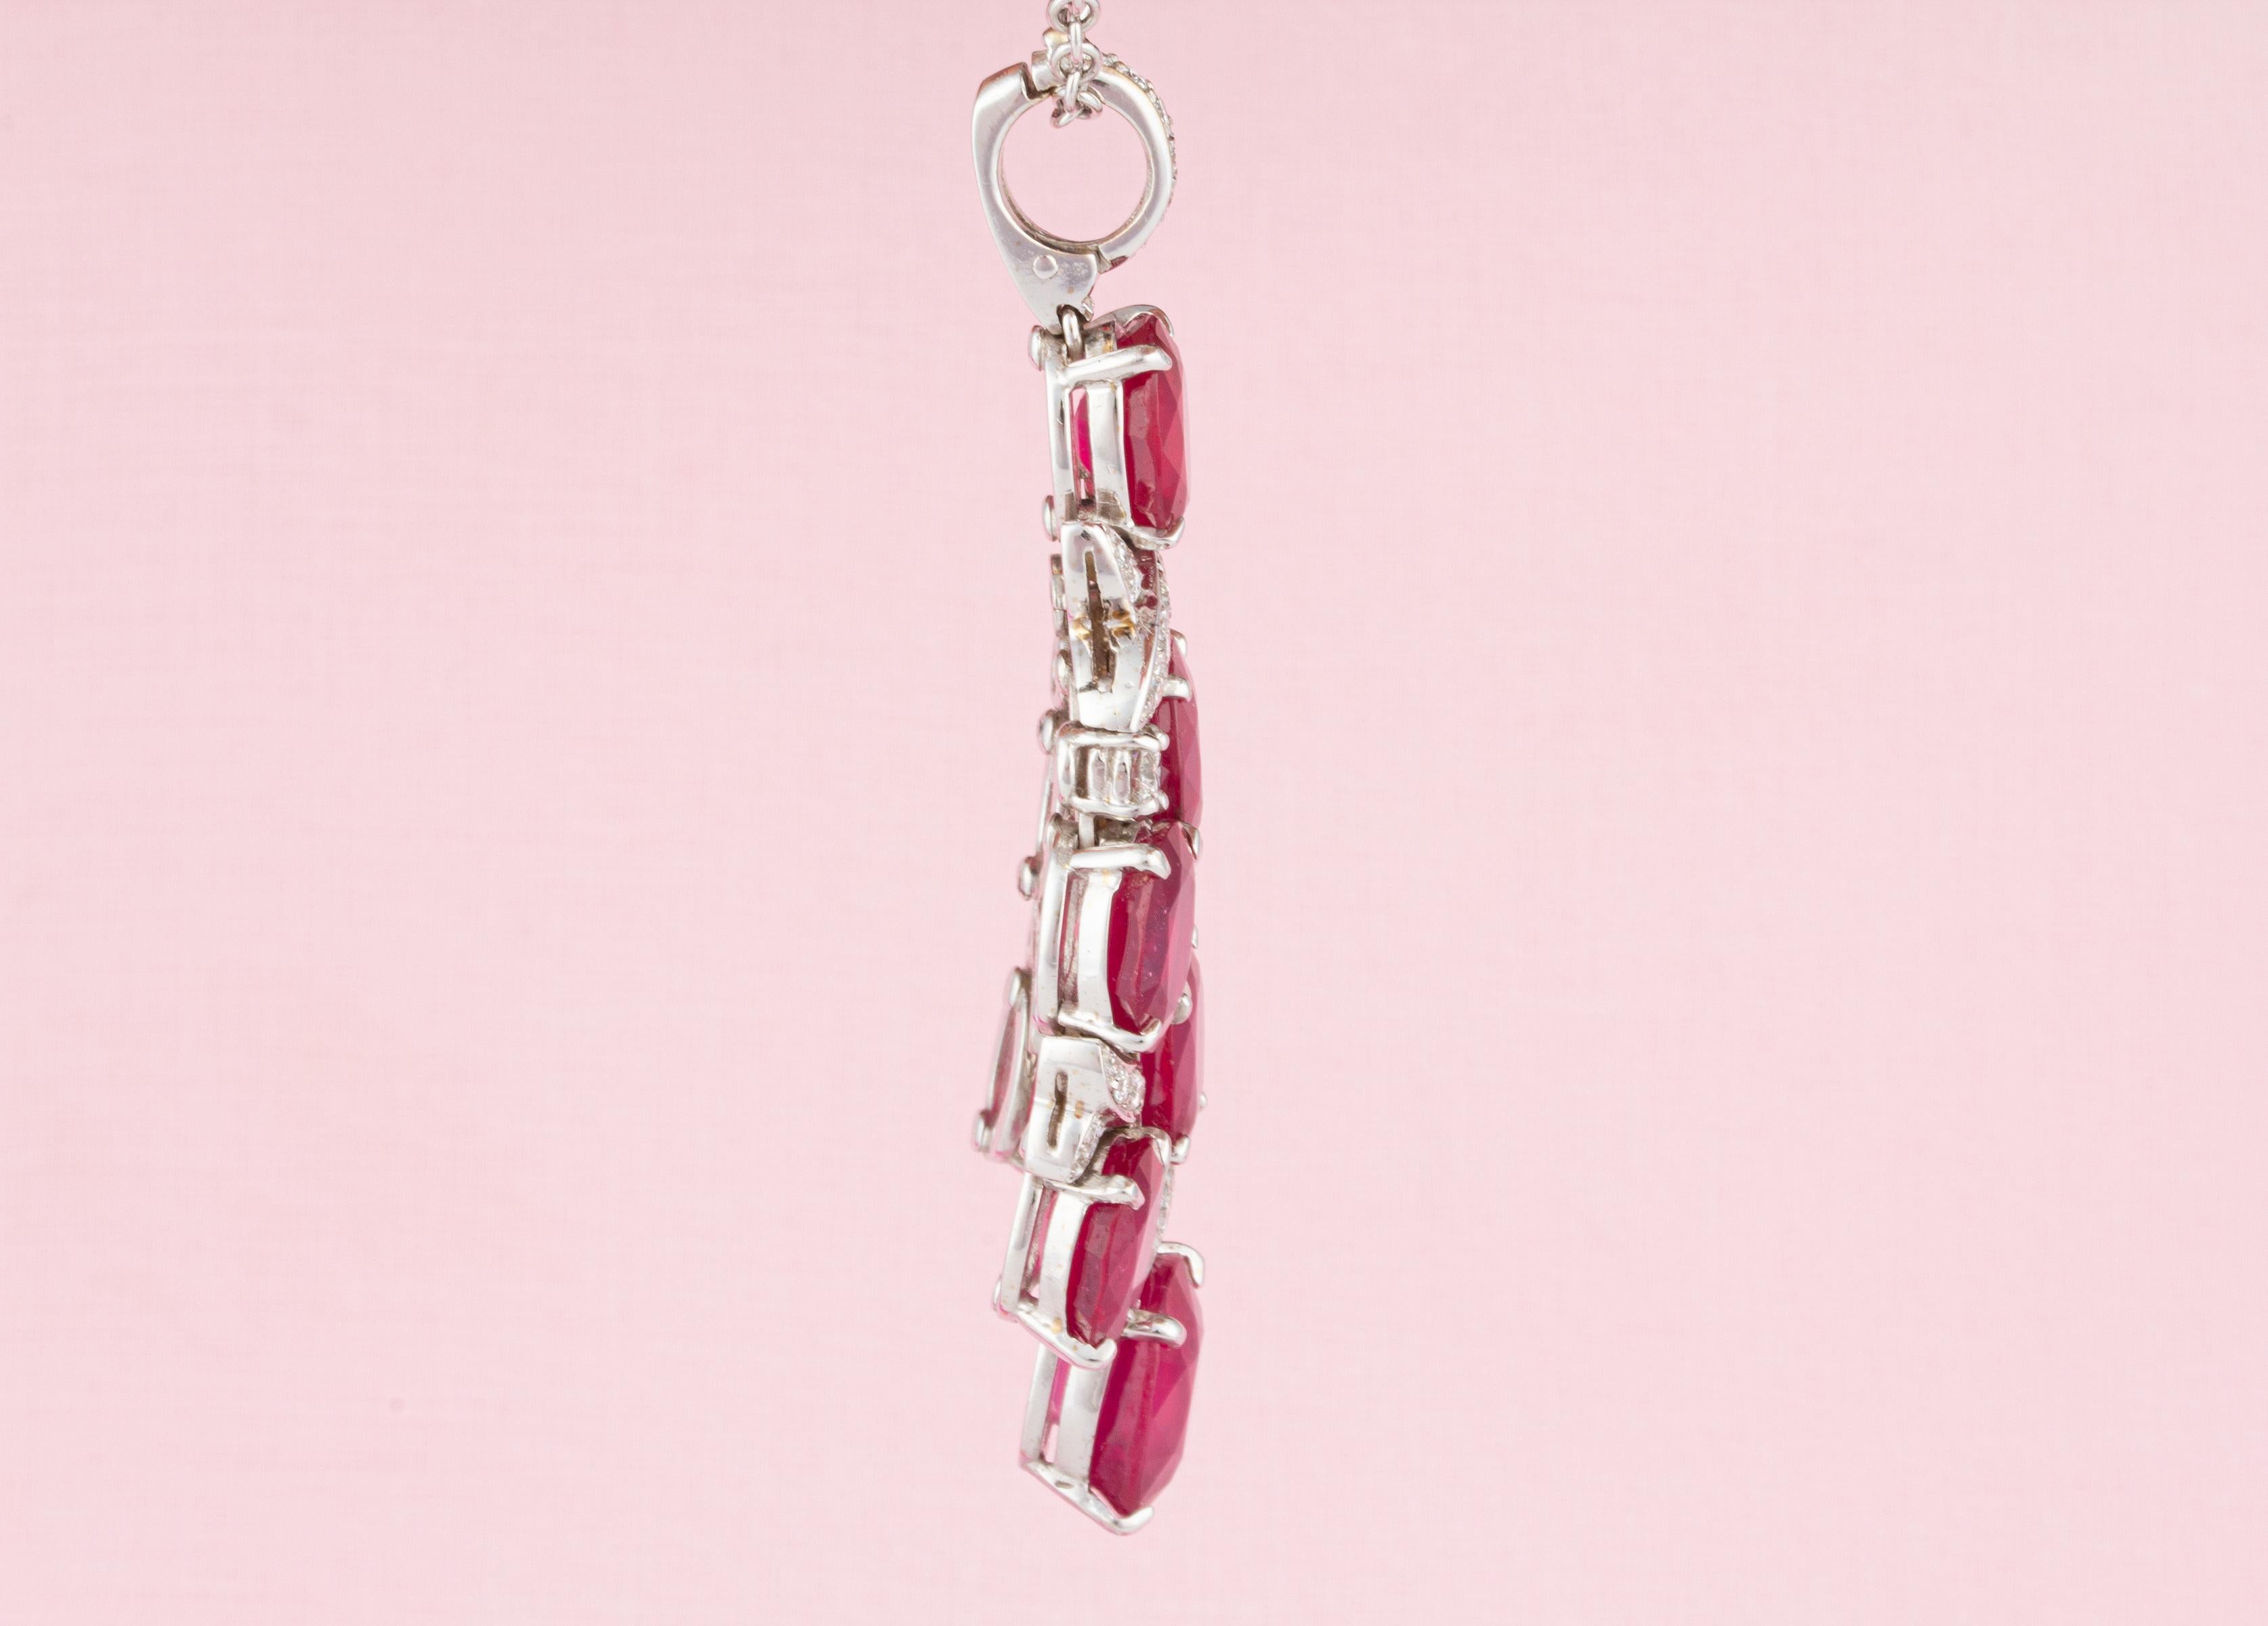 Brilliant Cut Ella Gafter Ruby Diamond Necklace Earrings Chandelier Set For Sale